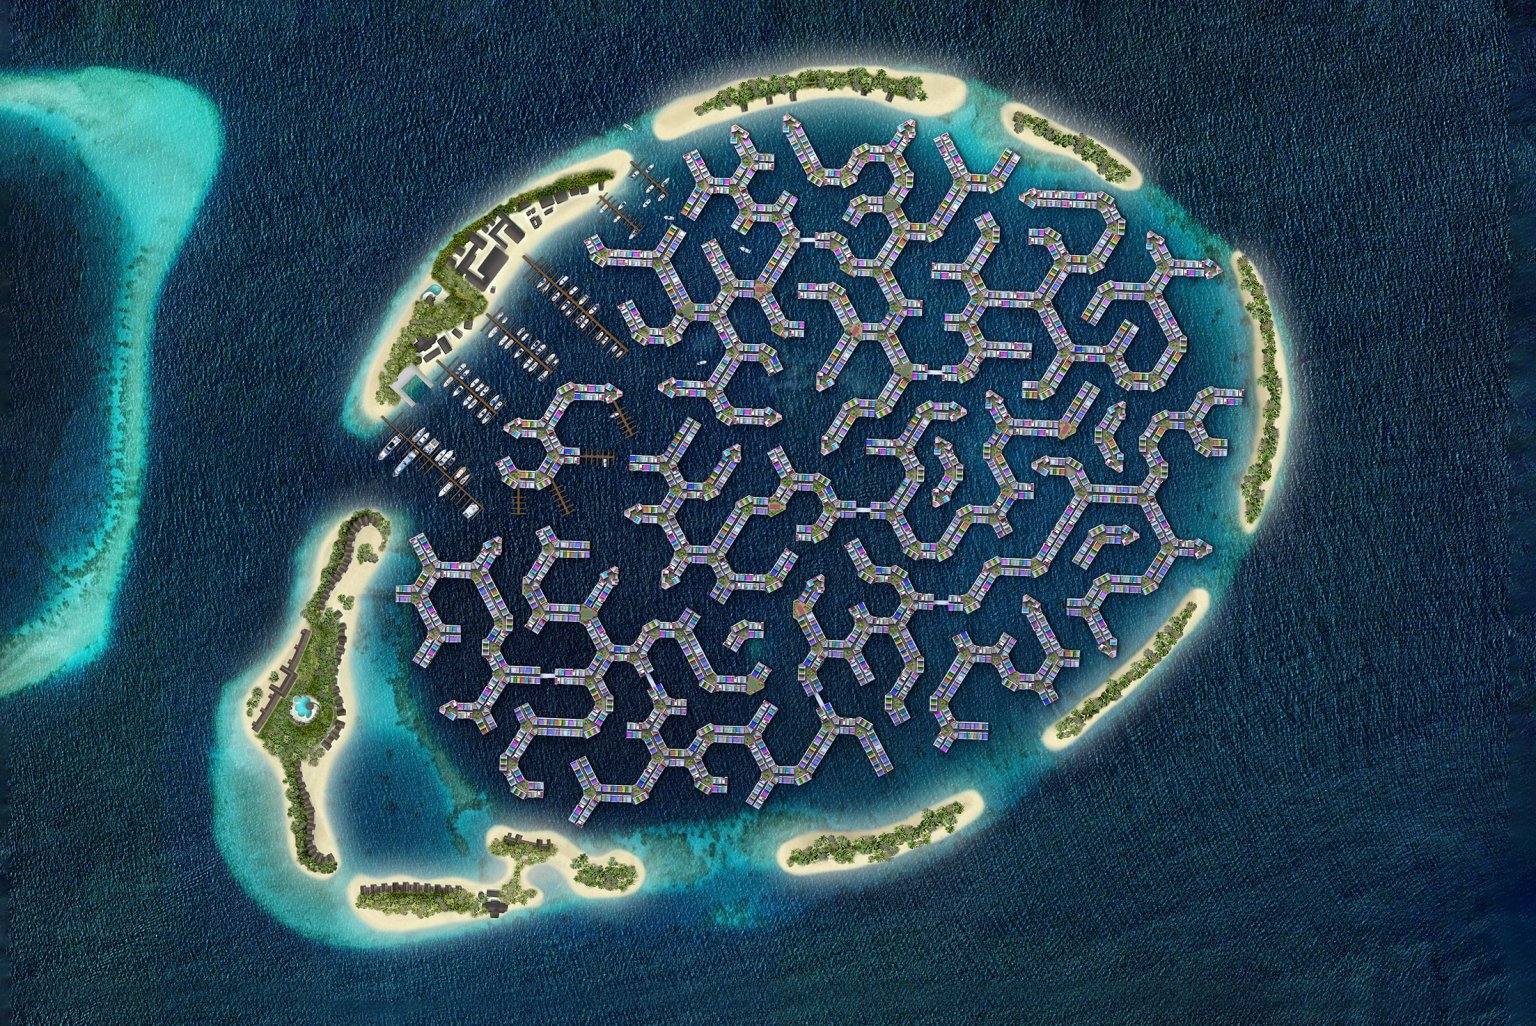 maldives-masterplan-150dpi-1536x1026-1.jpg